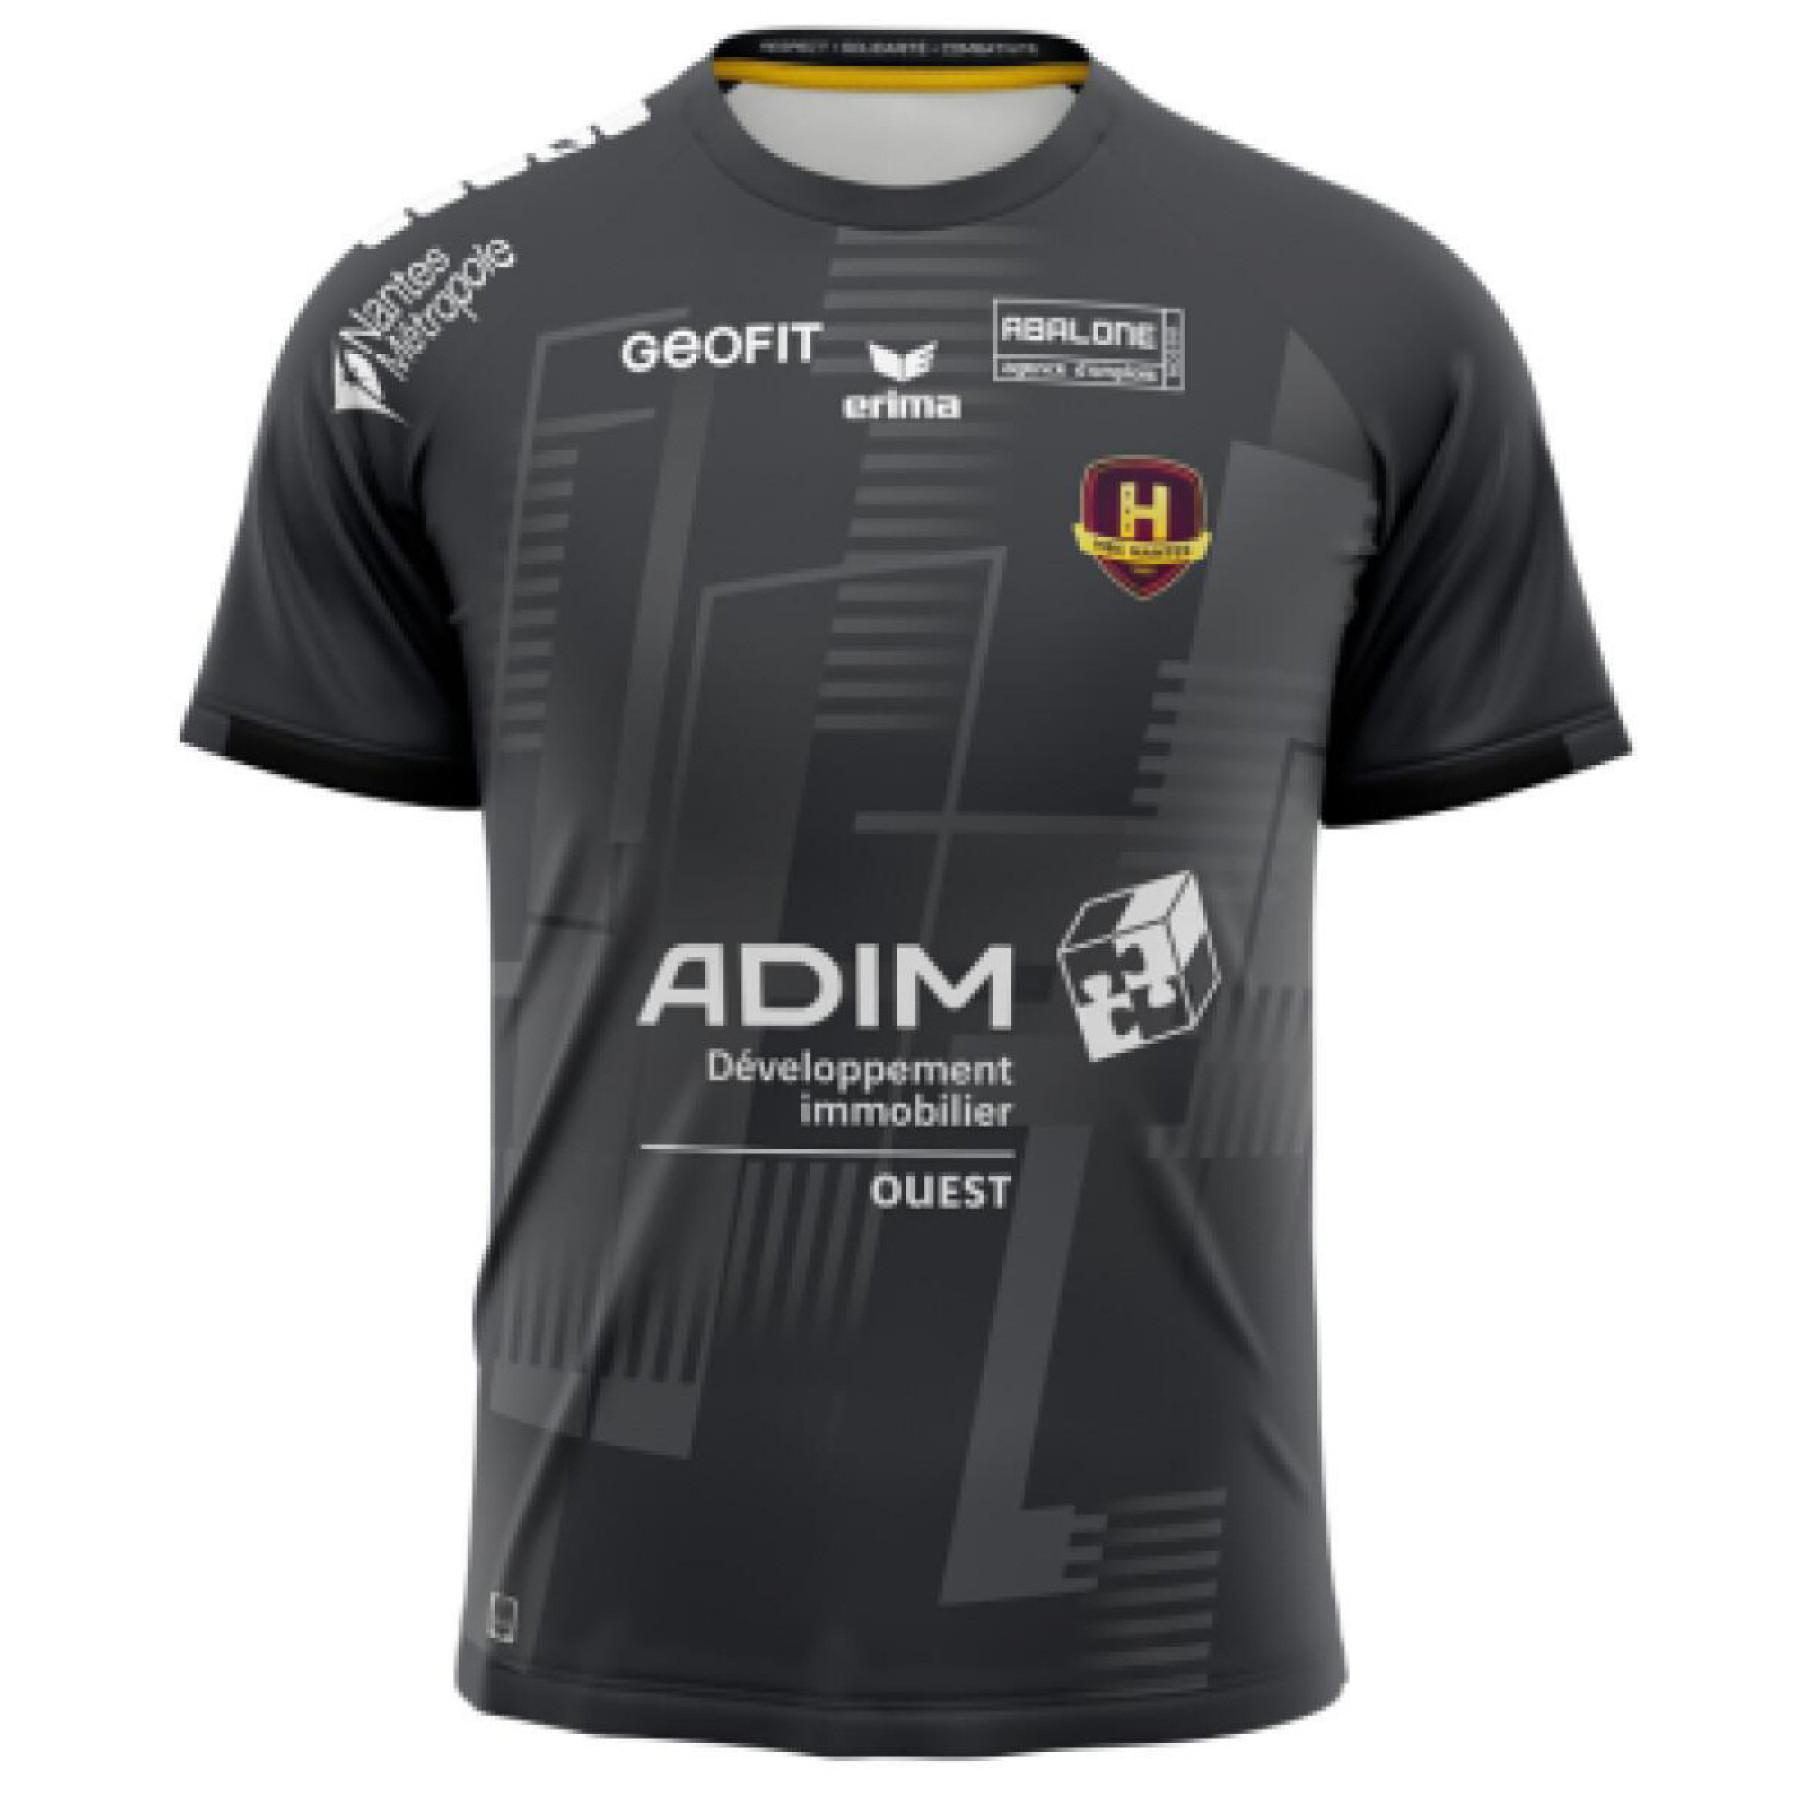 camisa da hbc Champions League Nantes 2020/21